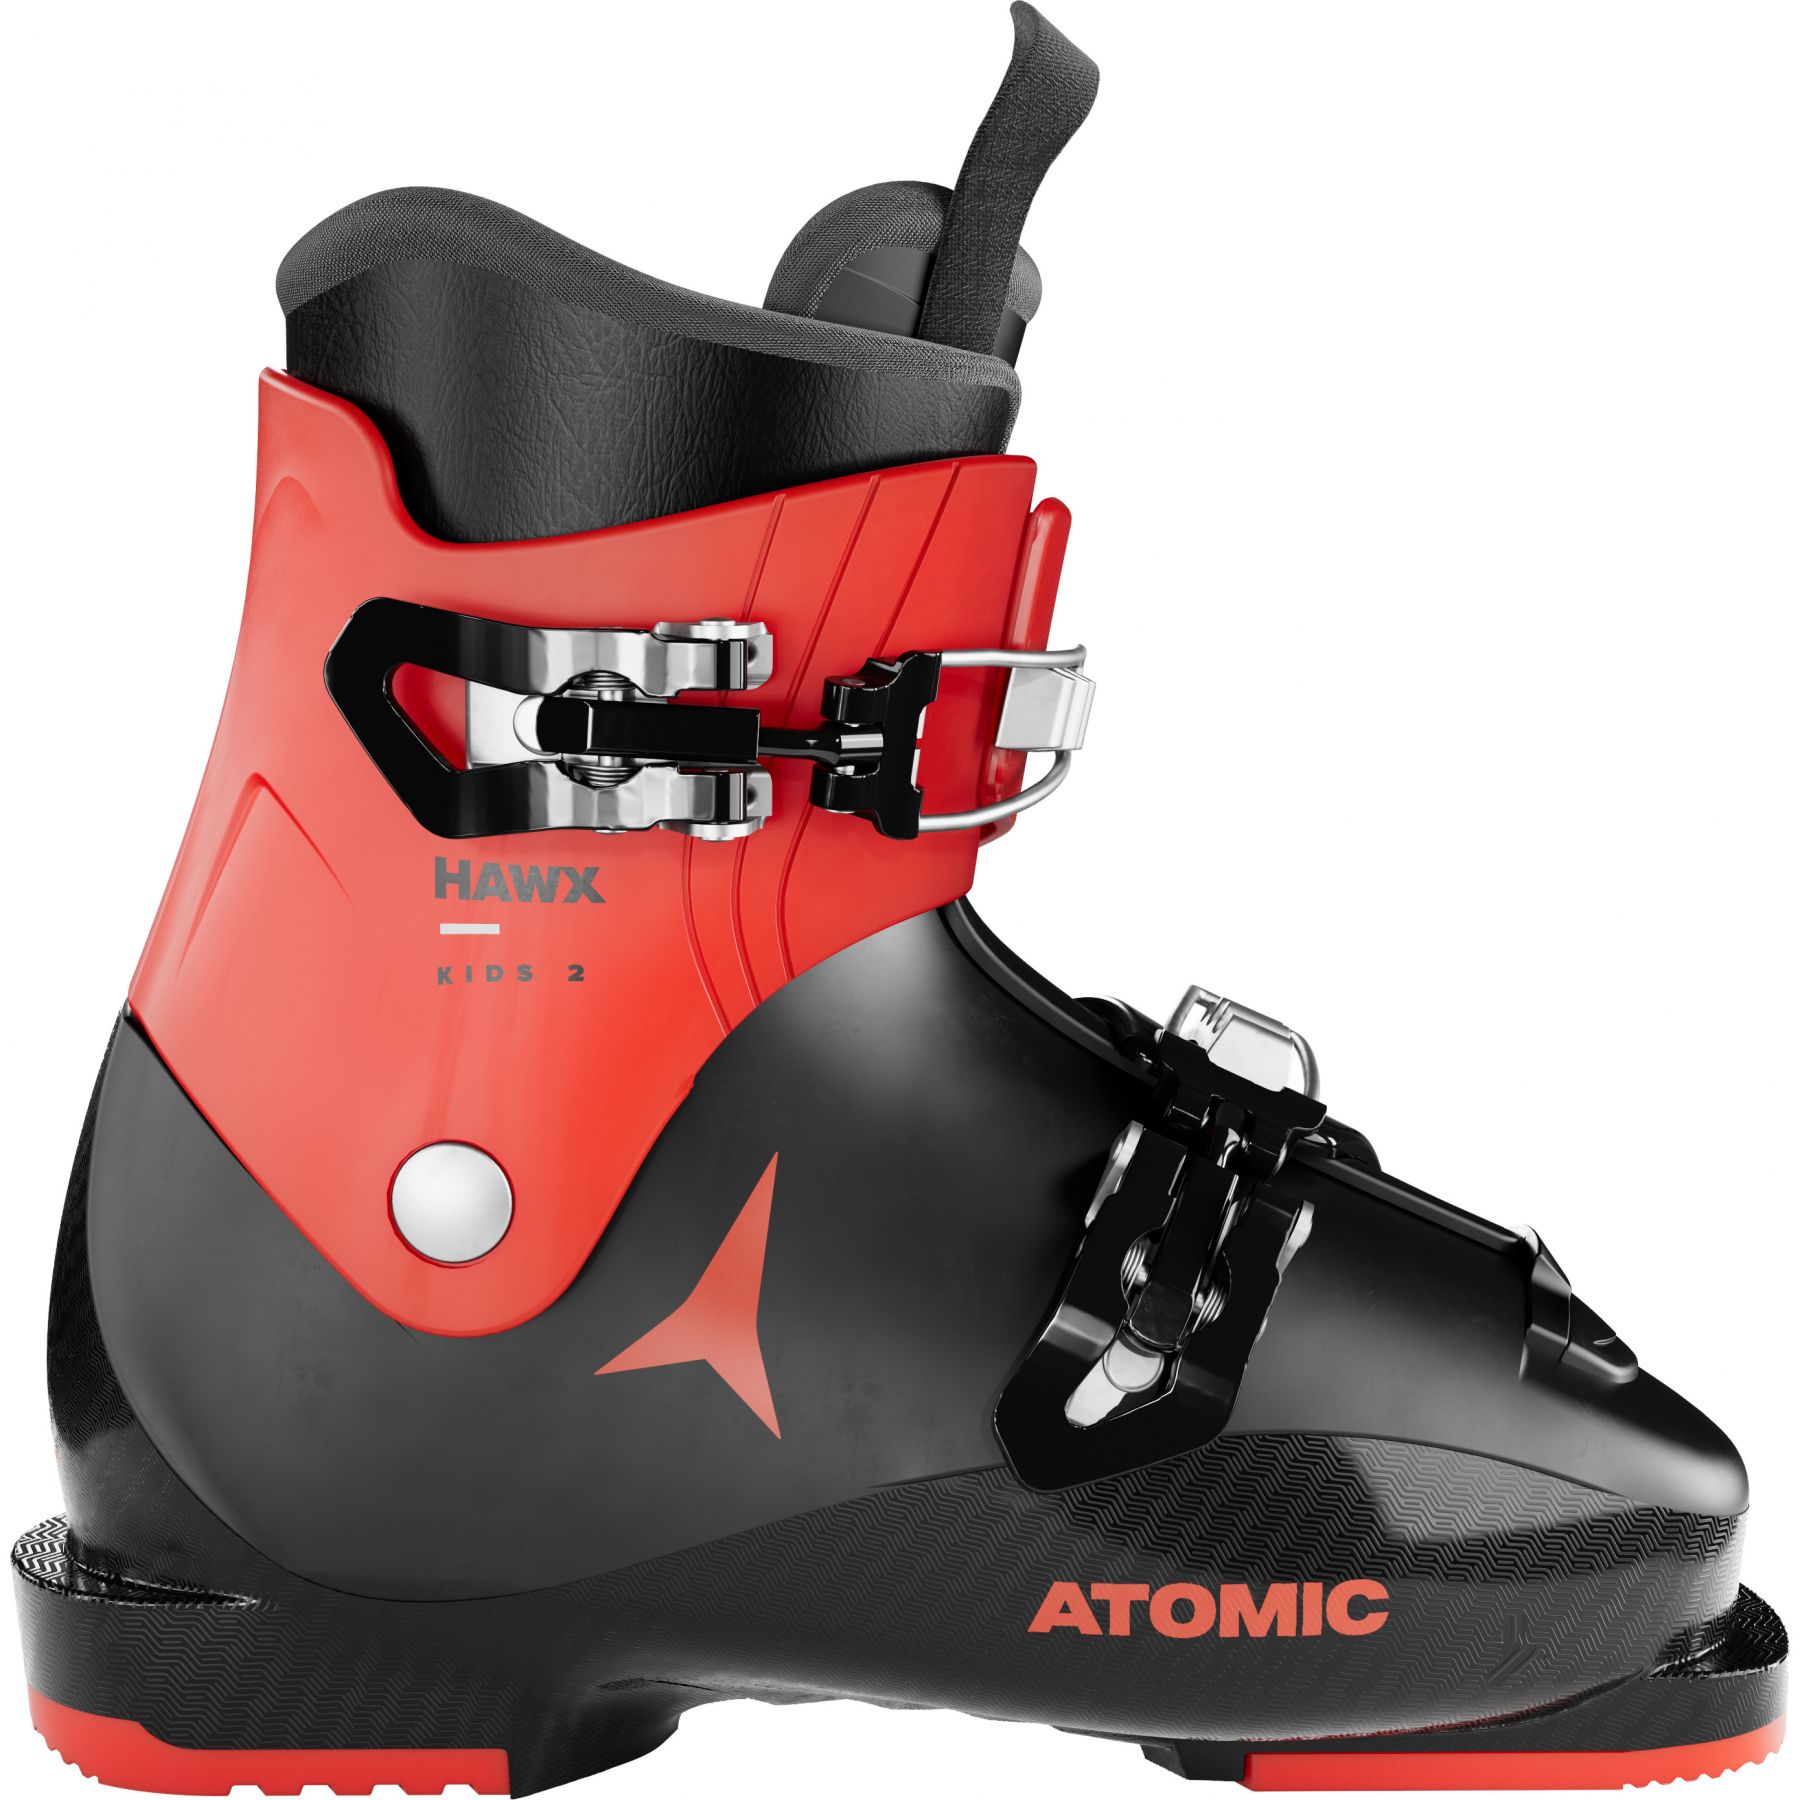 Atomic Hawx Kids 2, skistøvler, junior, sort/rød thumbnail